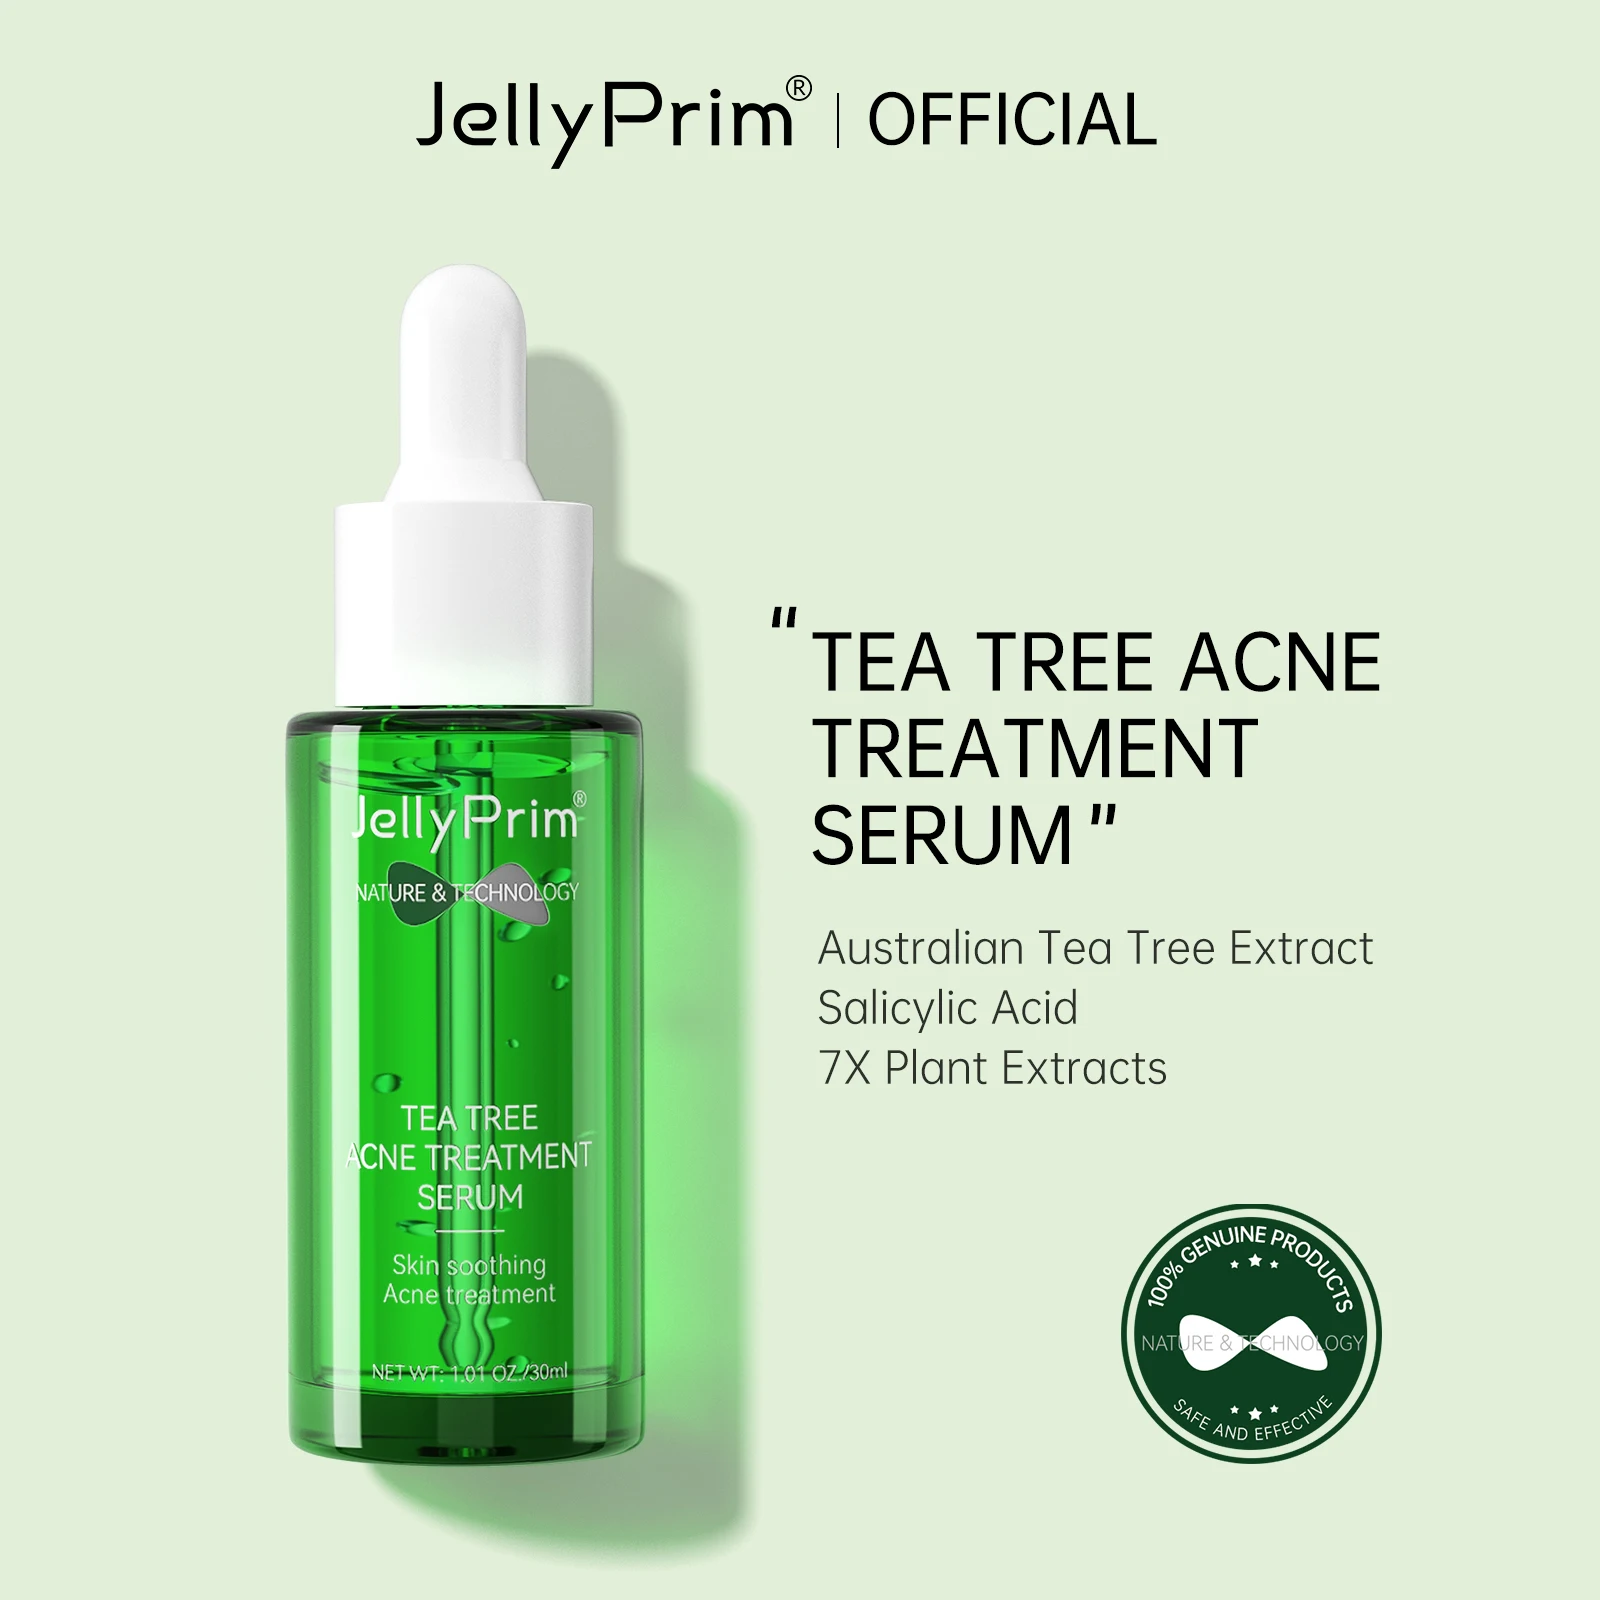 

Jellyprim Anti-Acne Tea Tree Serum Oil for Against Face Acne Treatment Moisturizer Pimple Scar Skincare Pore Shrinking Products